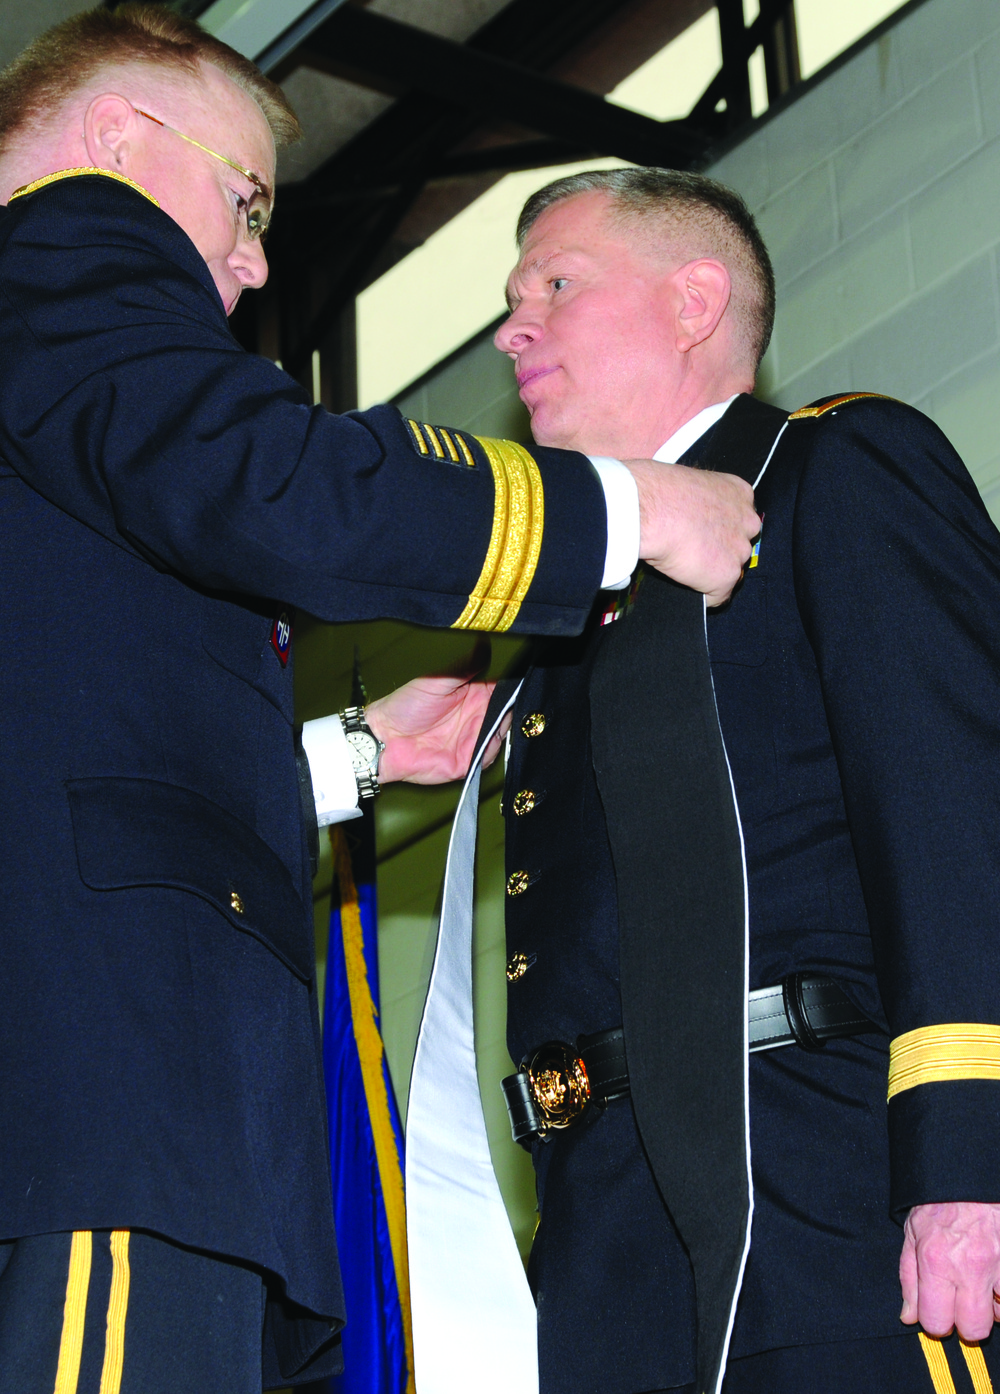 Chaplain assumes rank of brigadier general